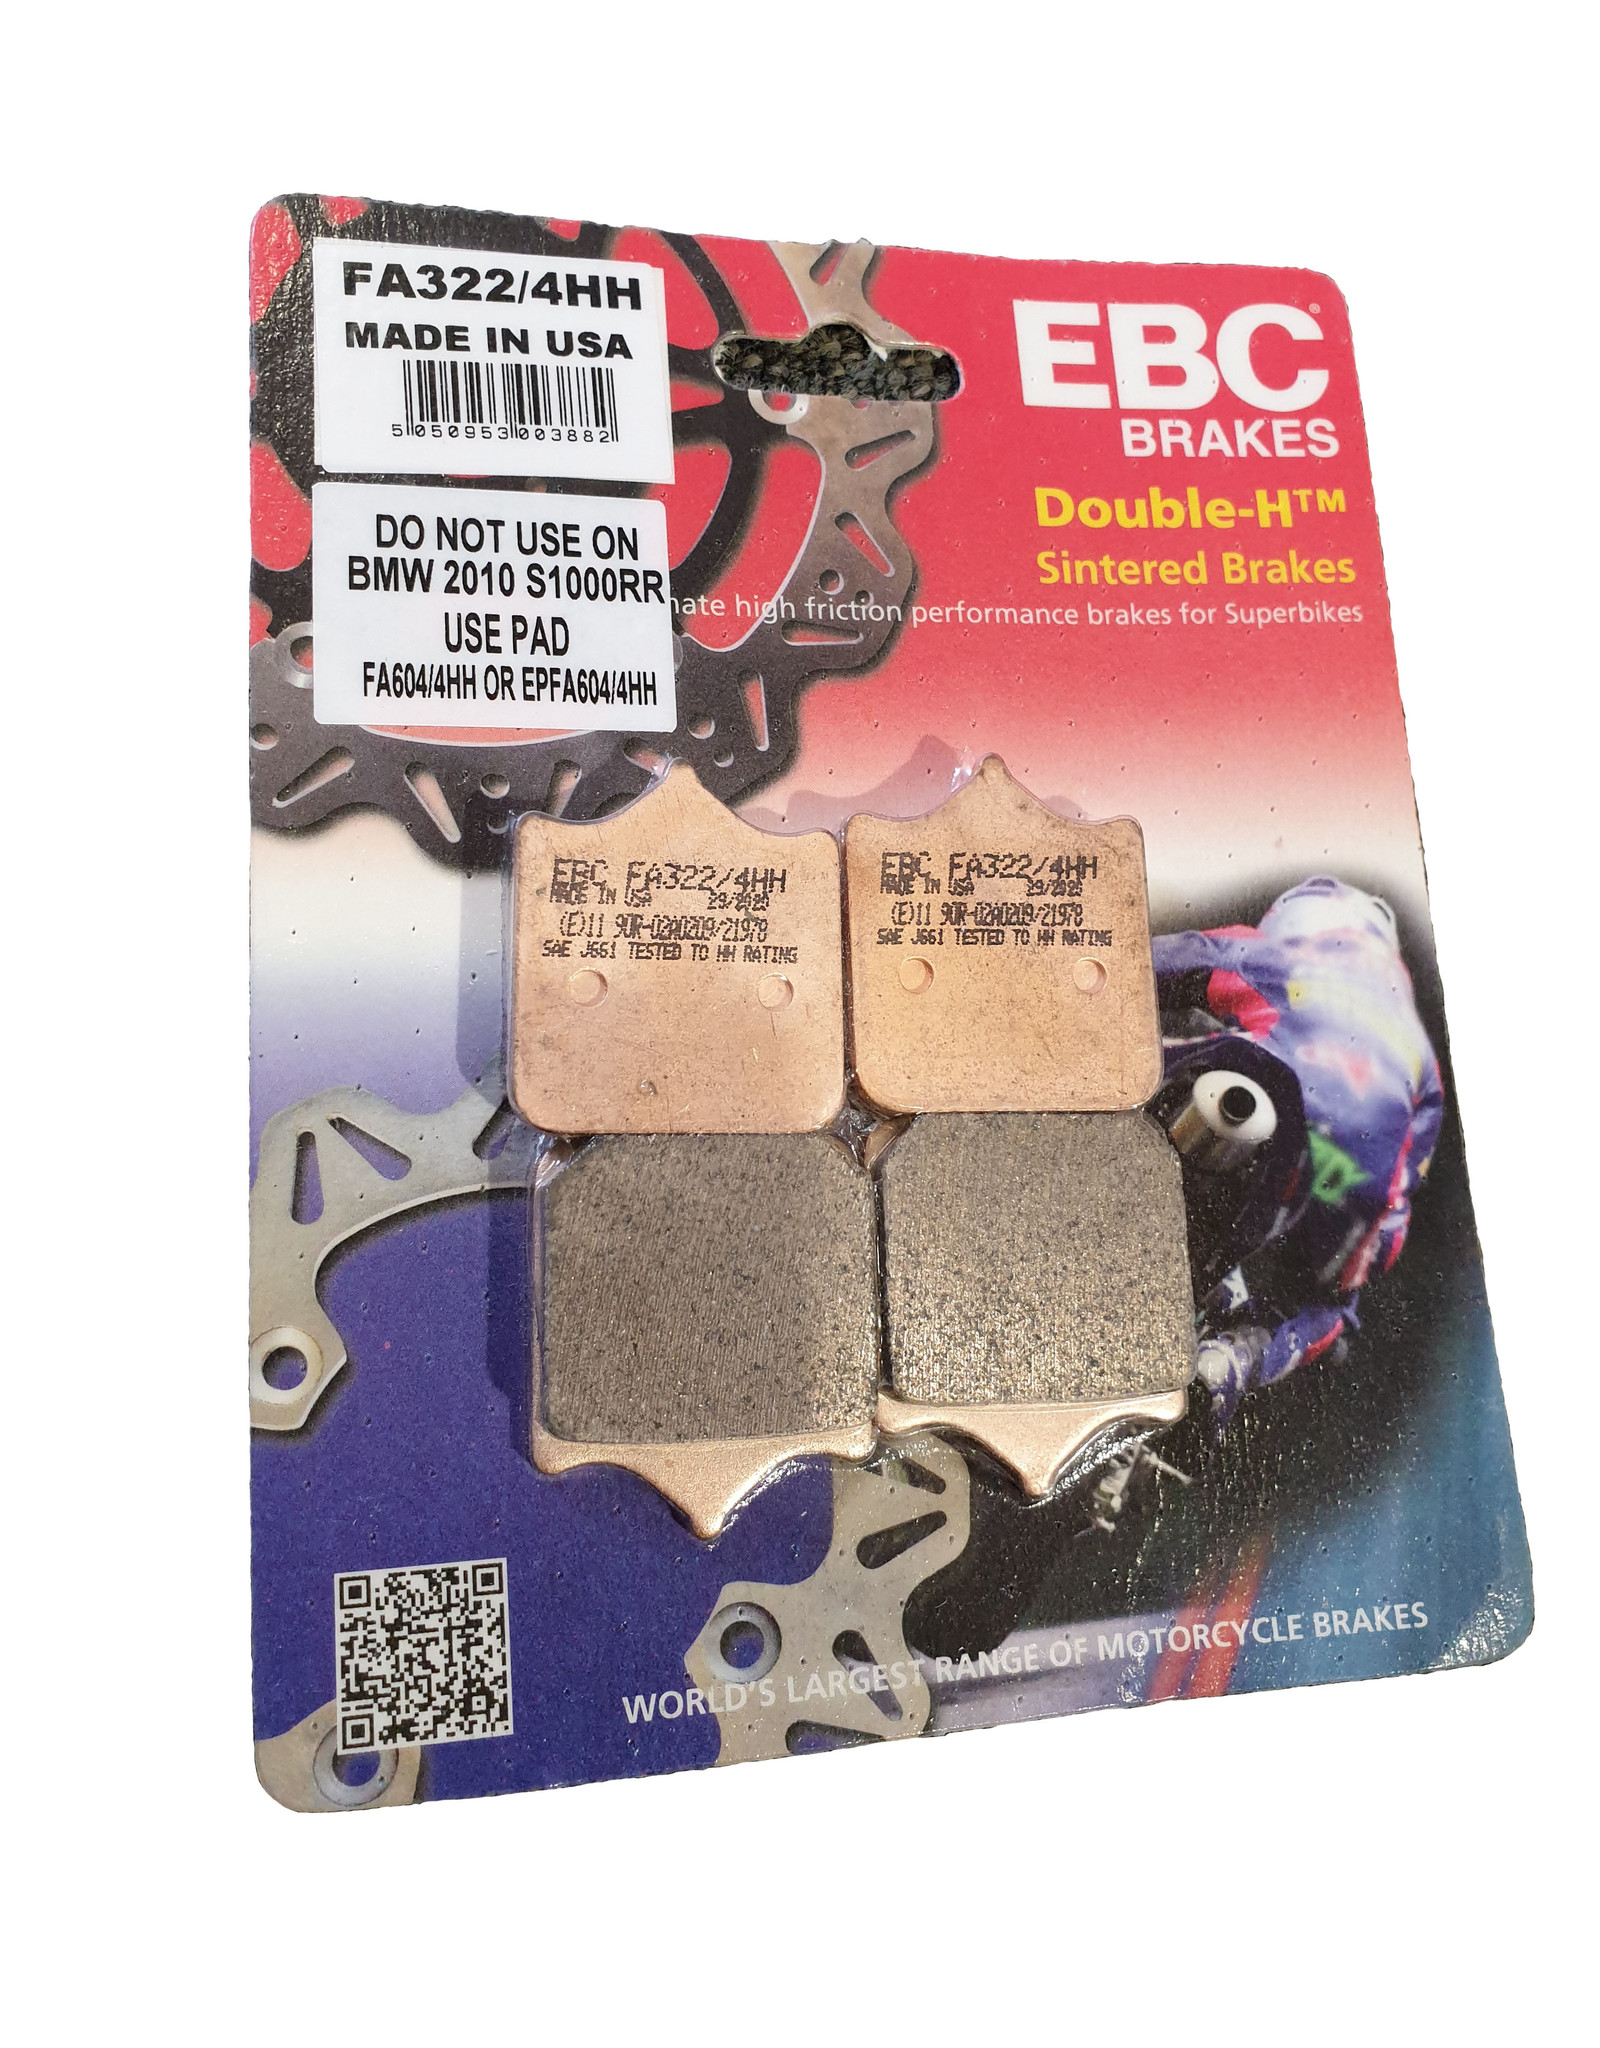 EBC Brakes EBC FA322/4HH 4 pad set